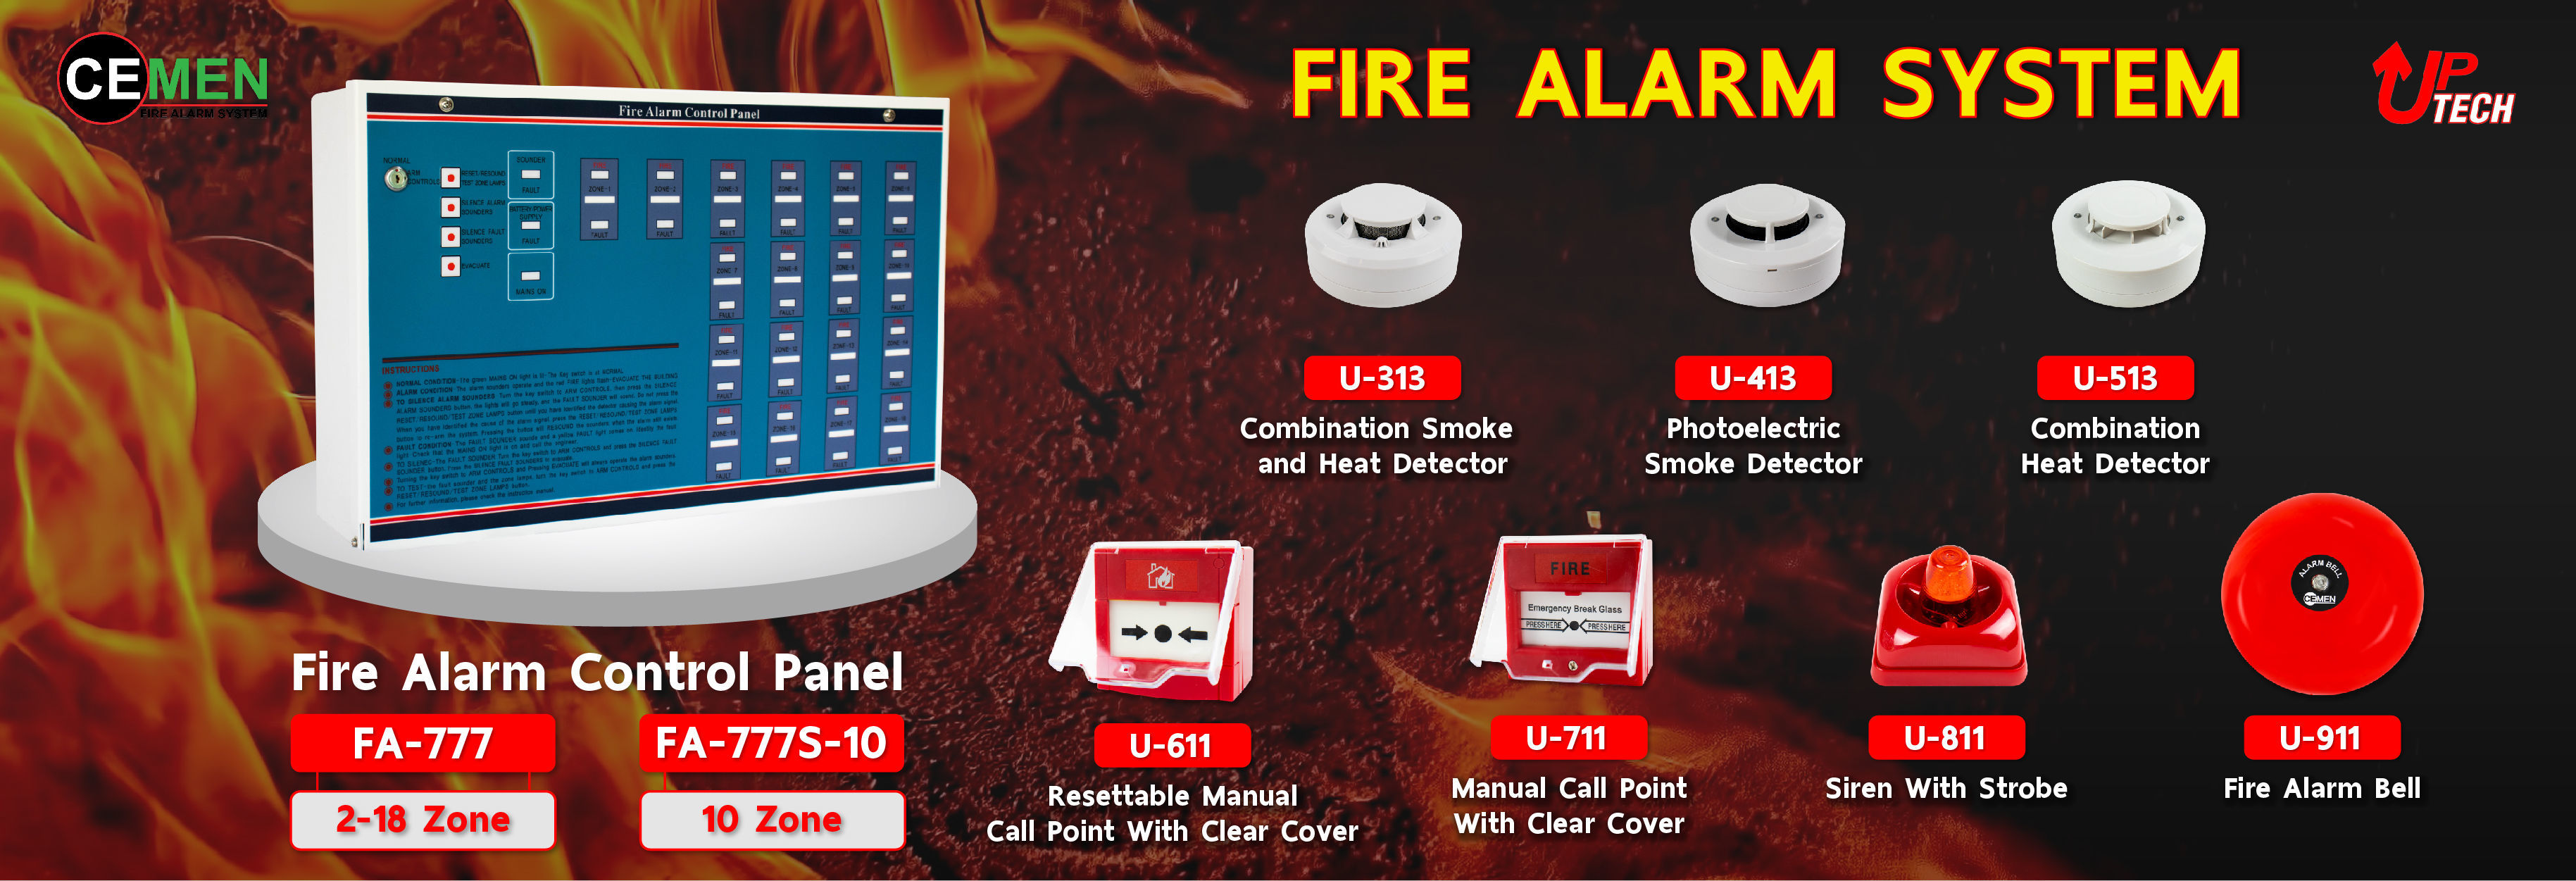 Fire Alarm System CEMEN